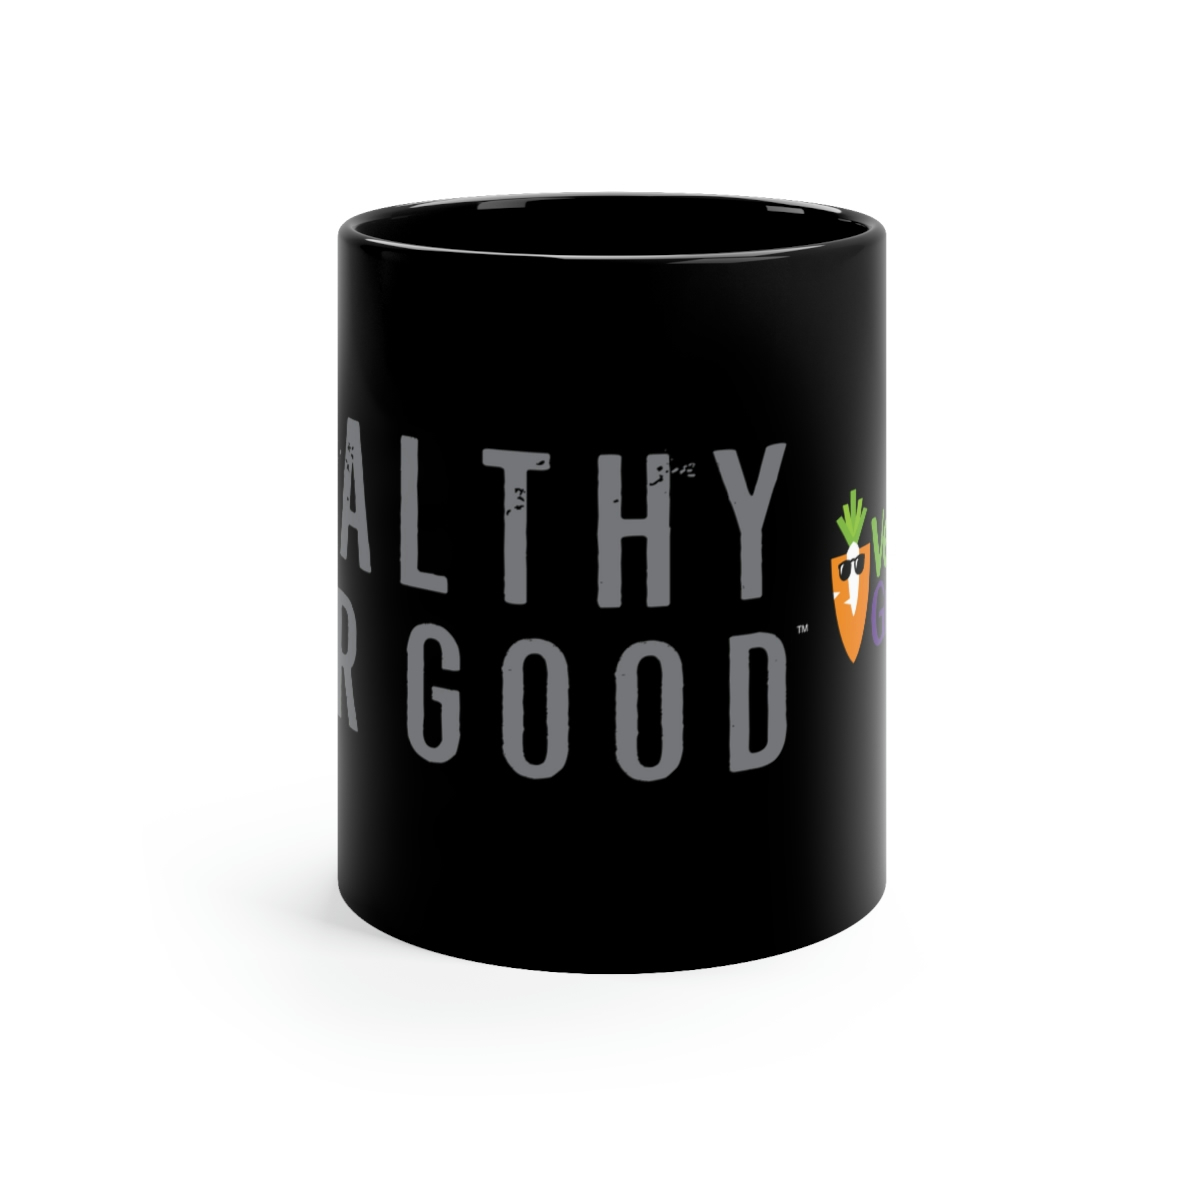 Healthy for Good Black Mug